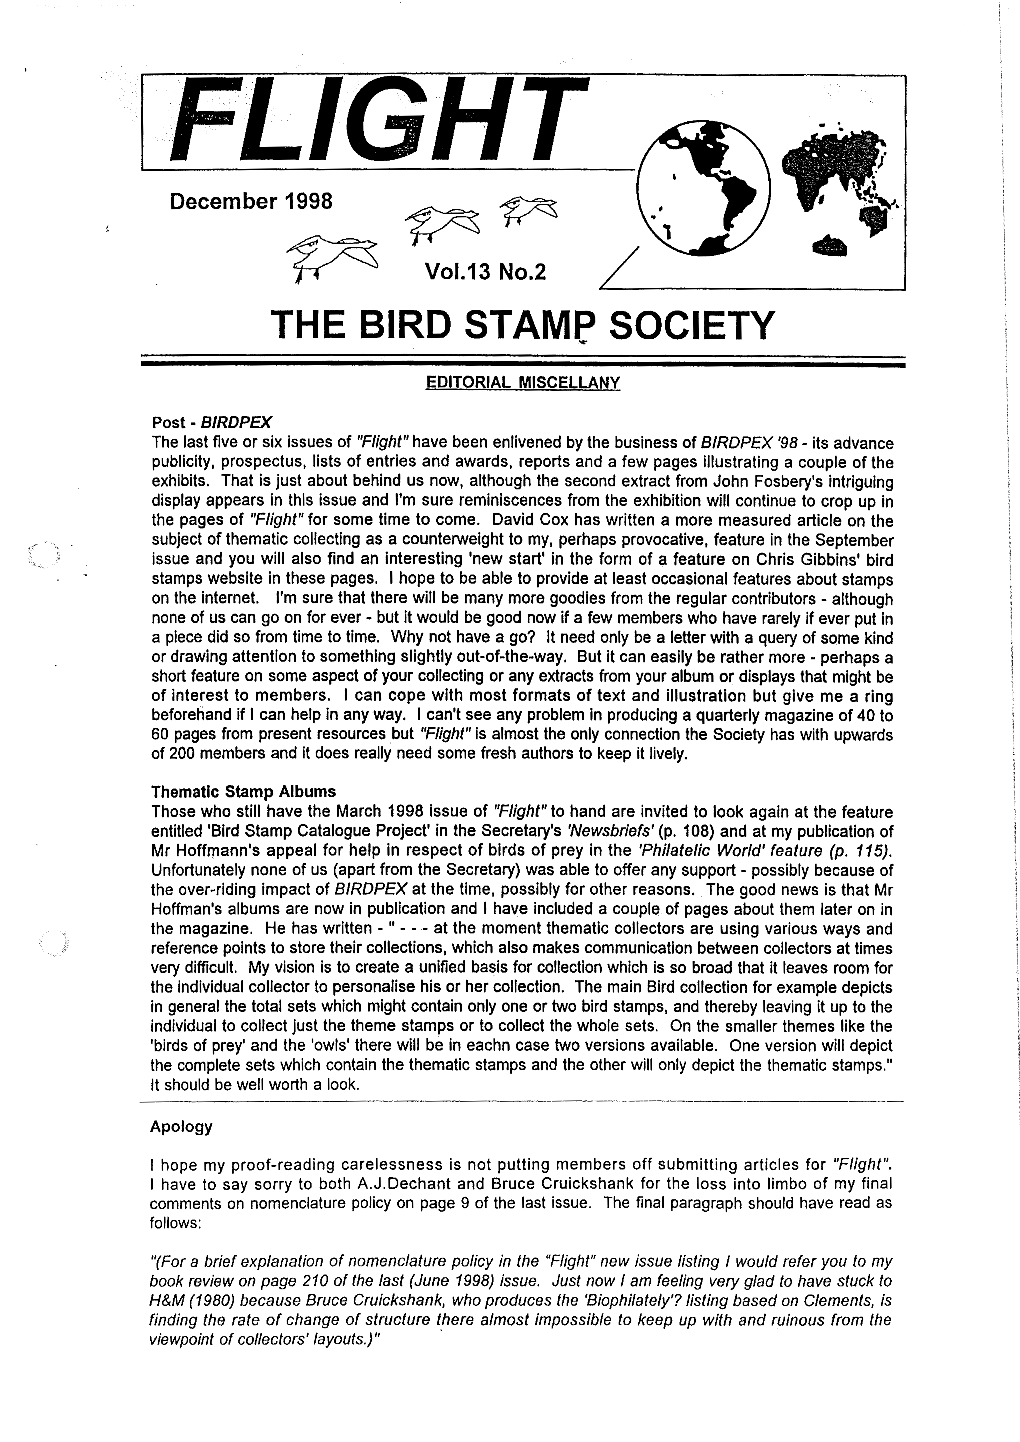 THE BIRD STAME SOCIETY G